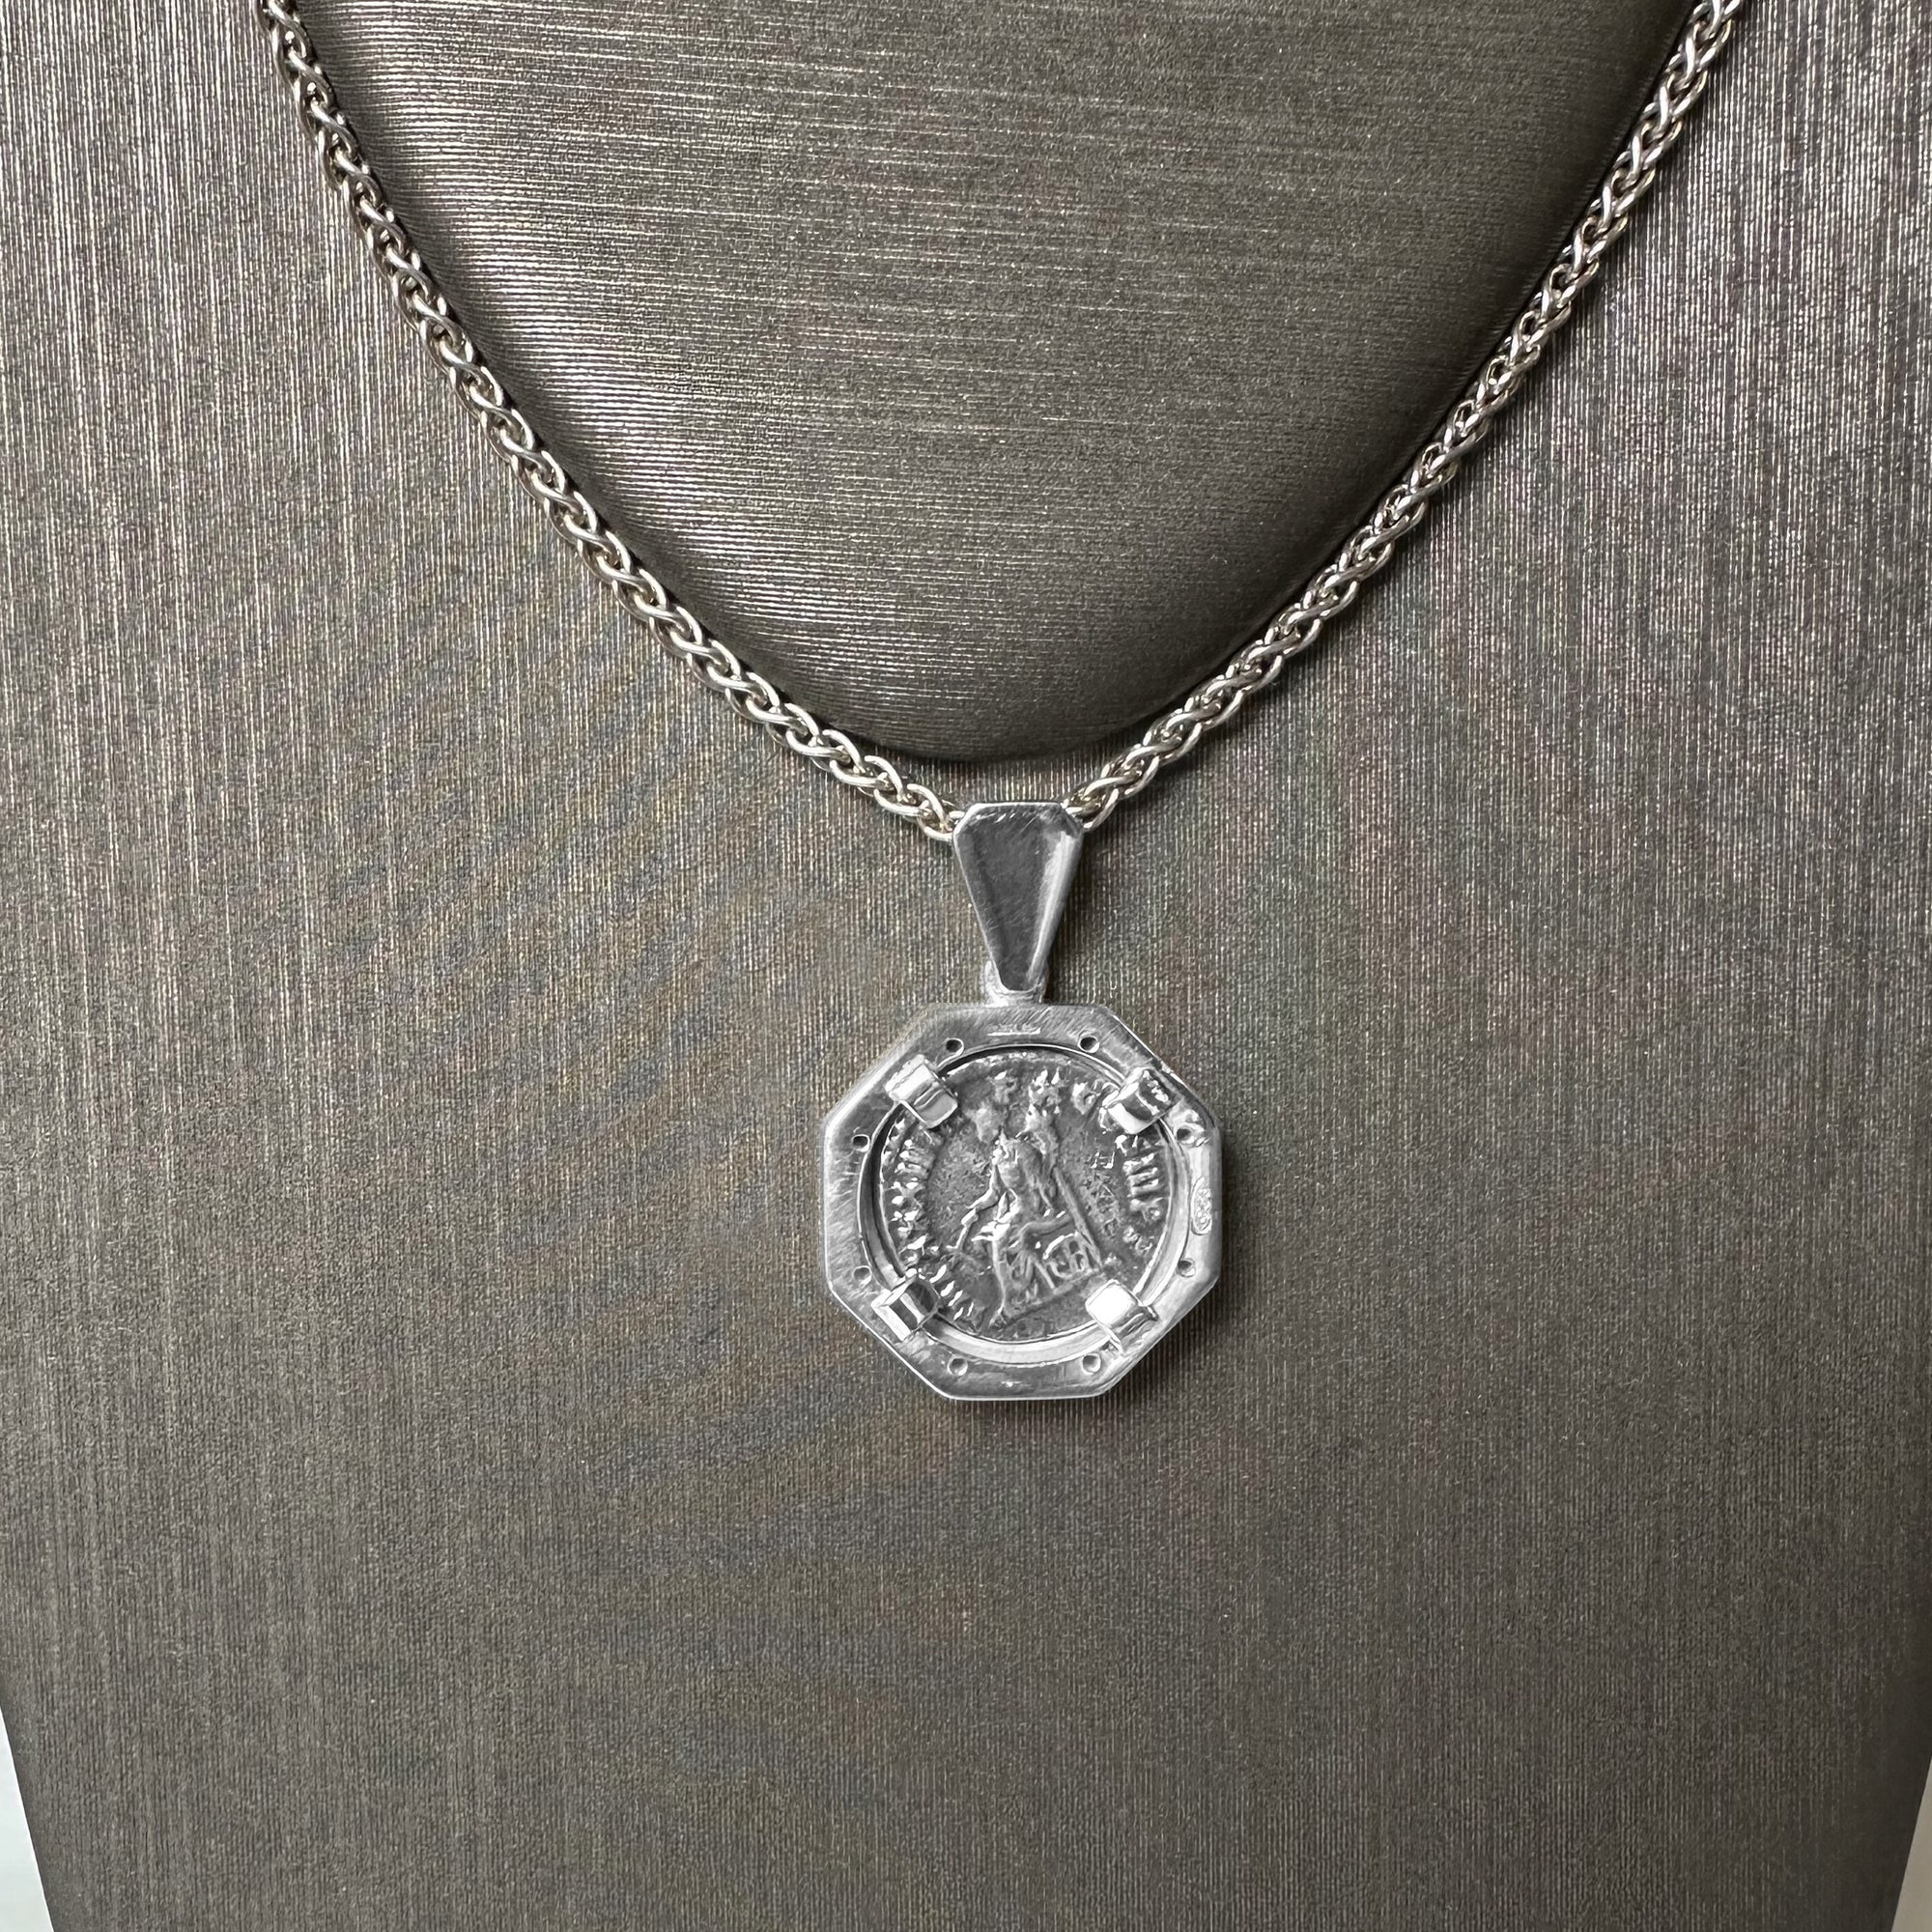 Marcus Aurelius Necklace - Museum Quality Replica of an Ancient Roman Coin  | eBay